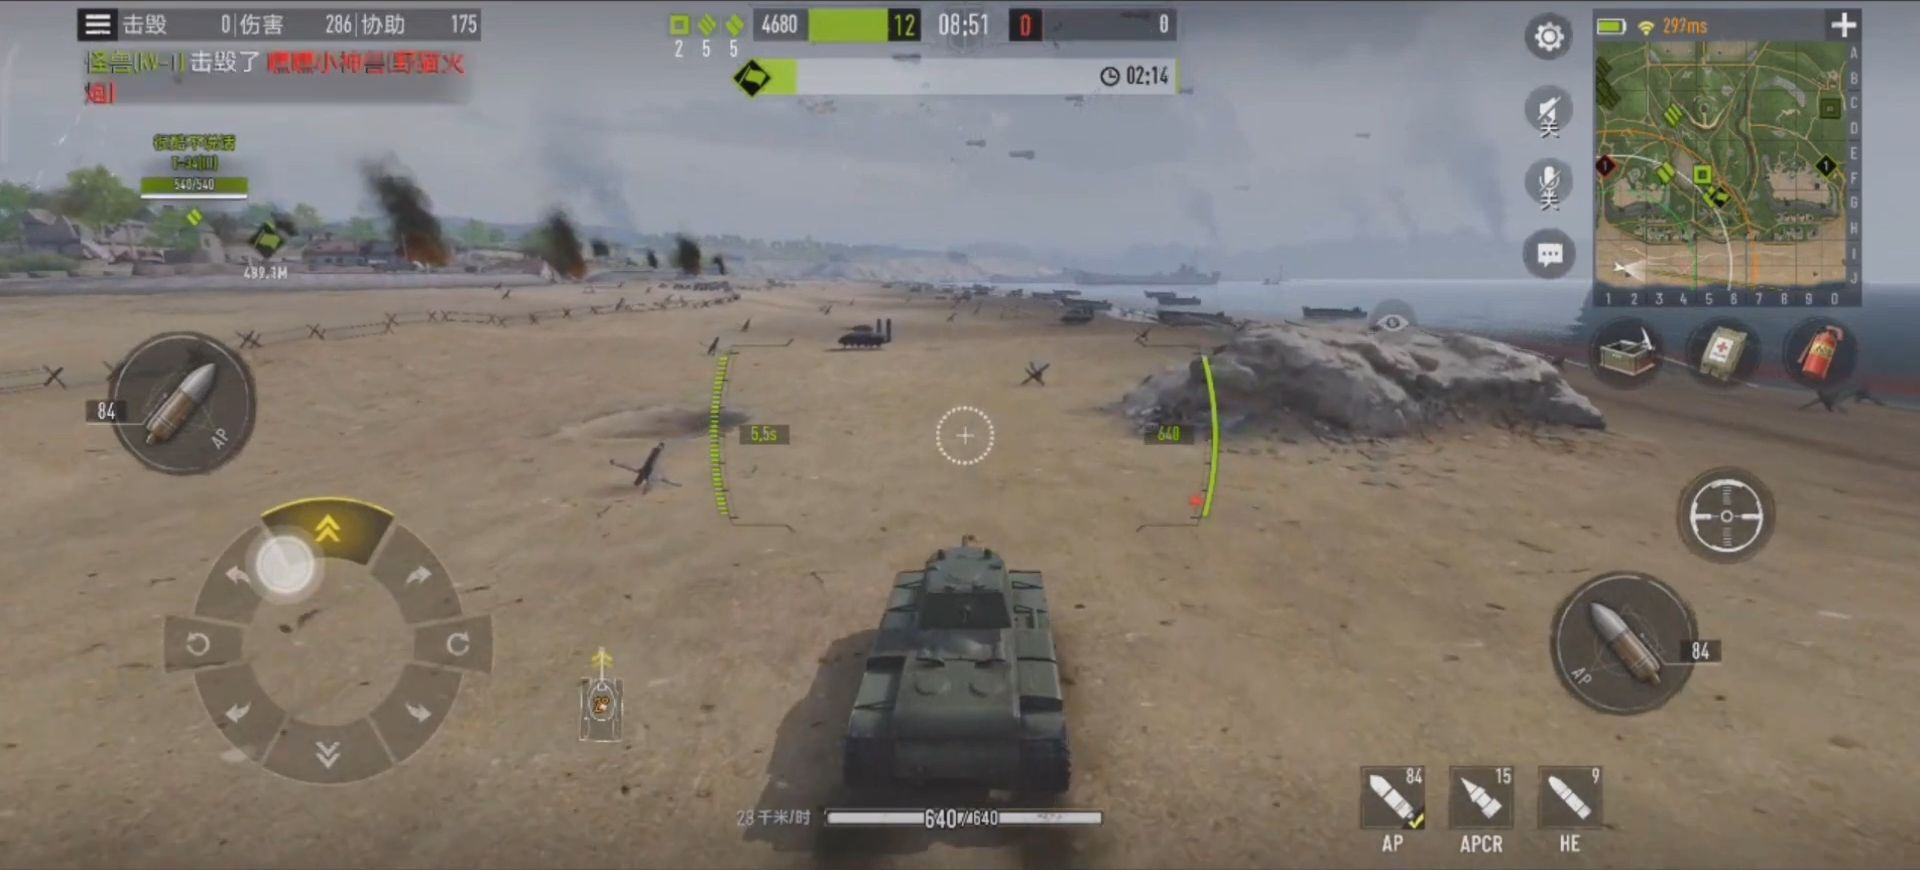 Tank Company - Android game screenshots.